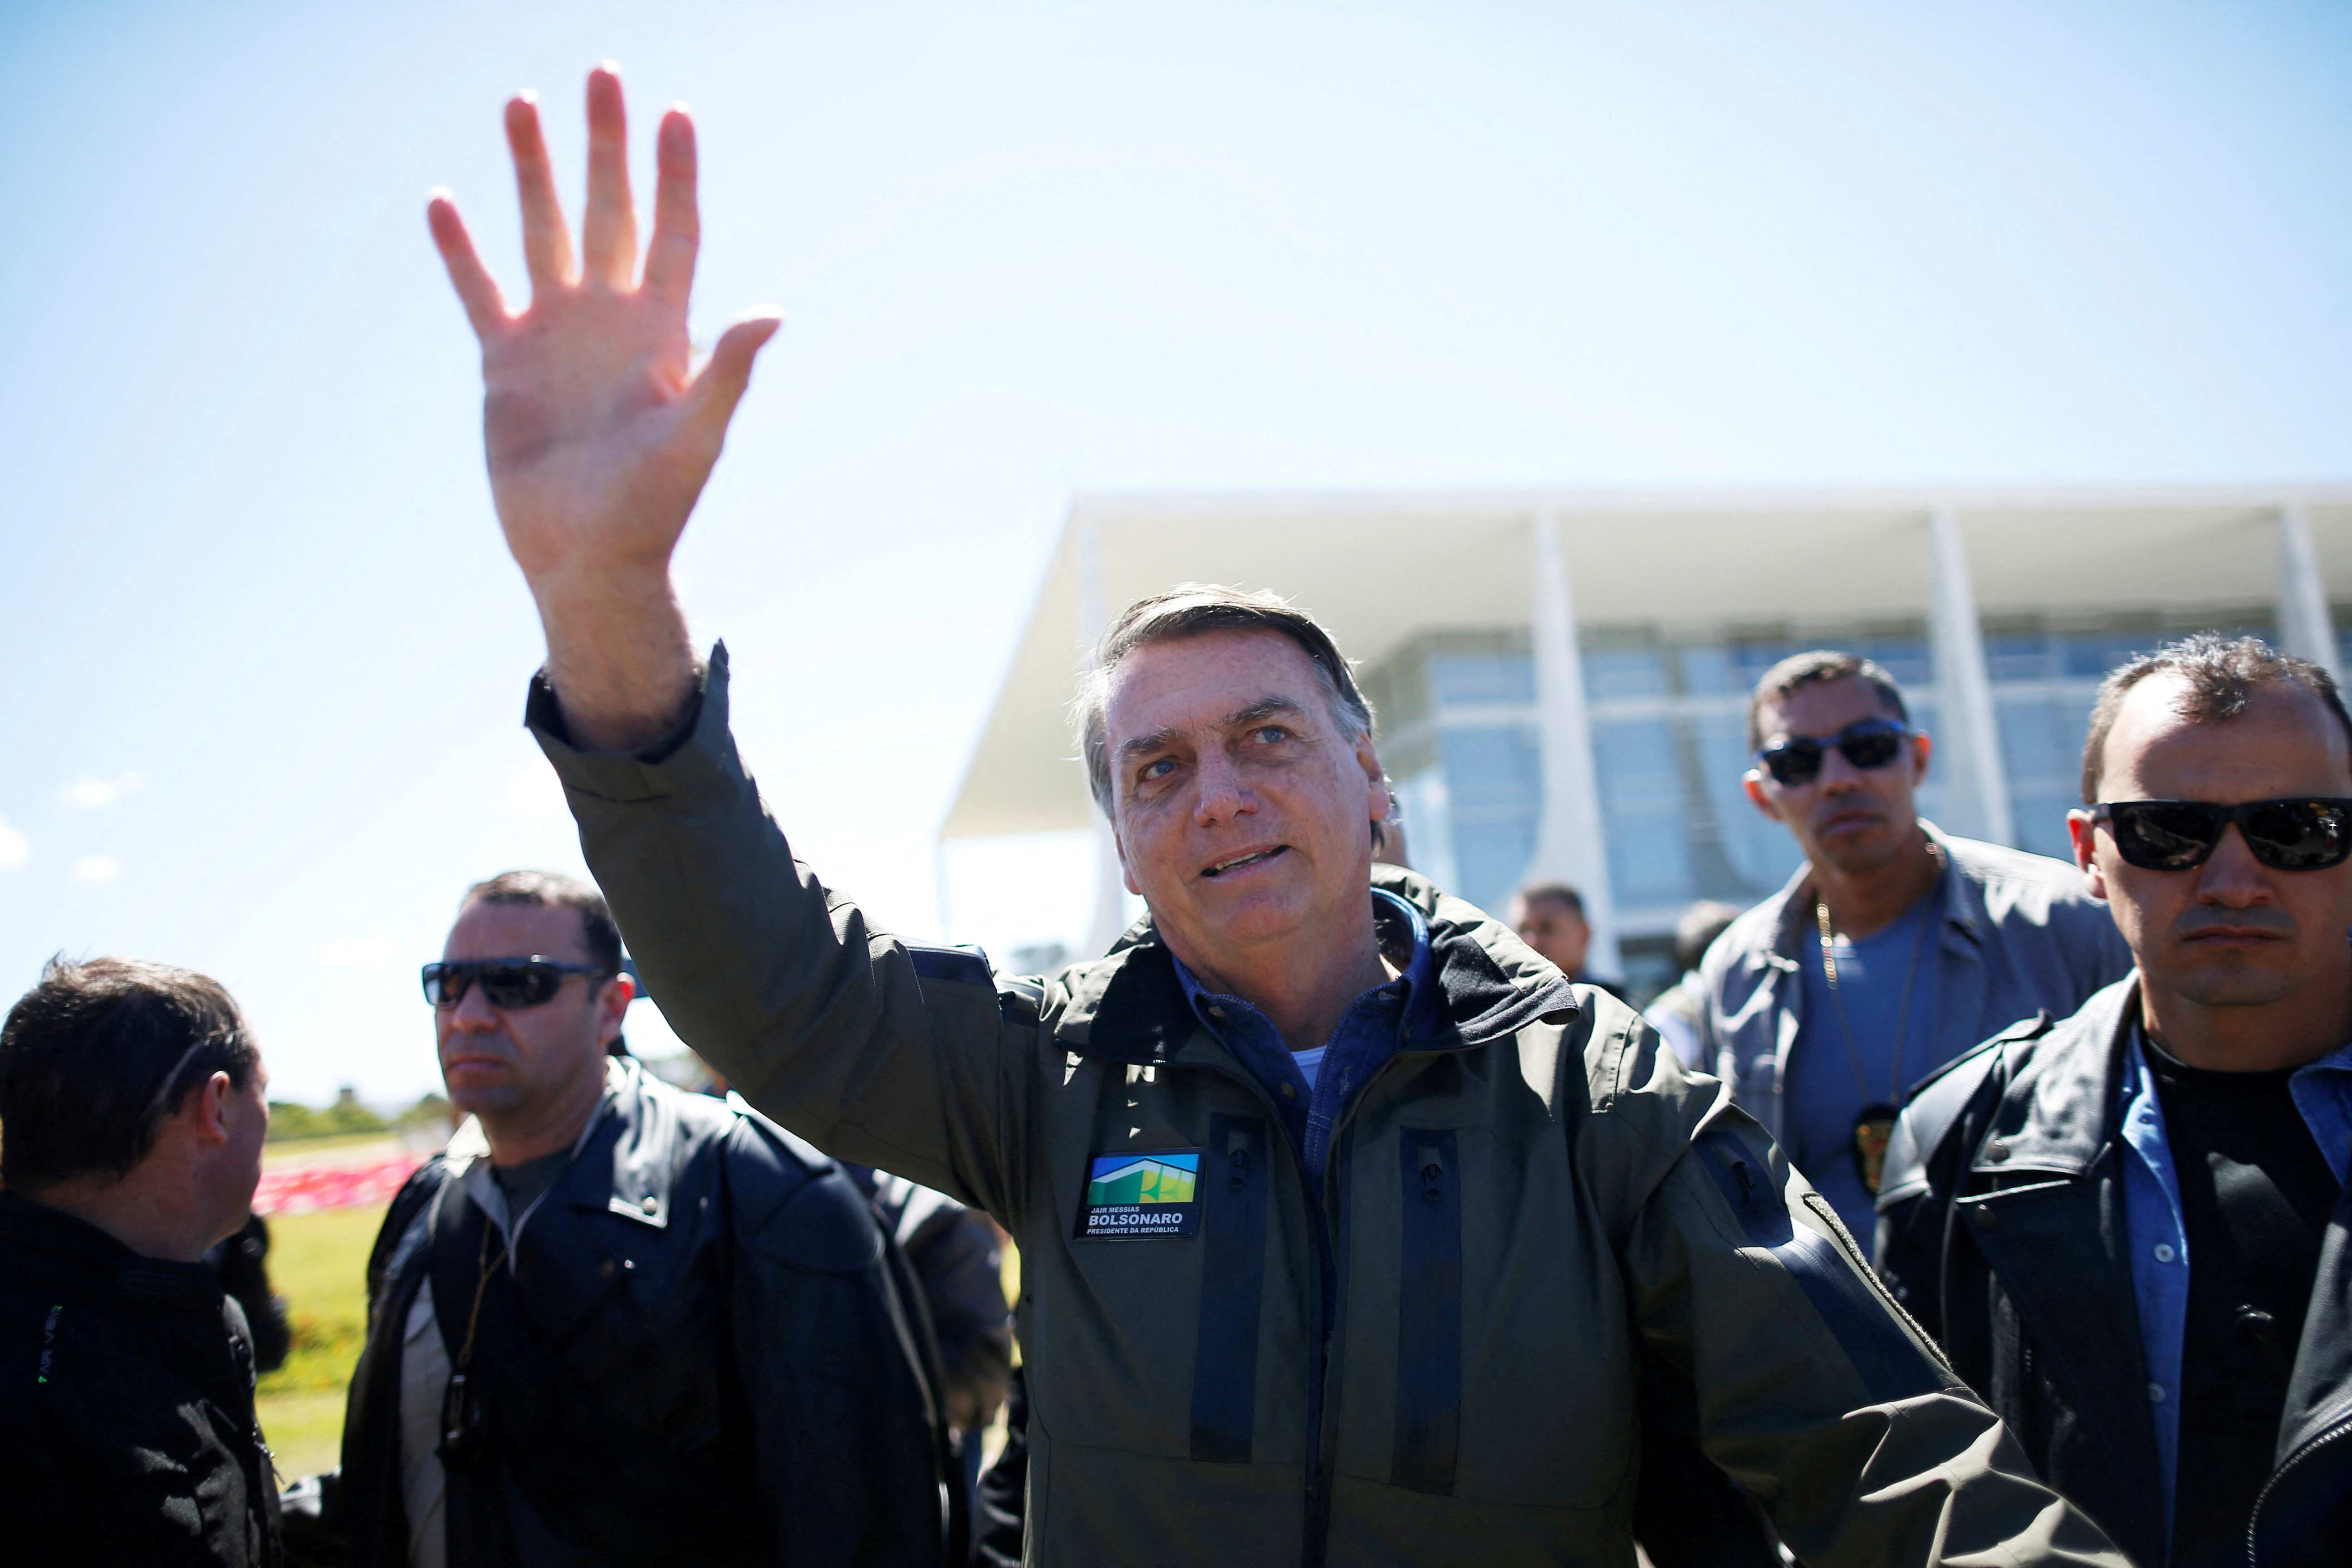 Brazil's President Bolsonaro leads a motorcade rally, in Brasilia